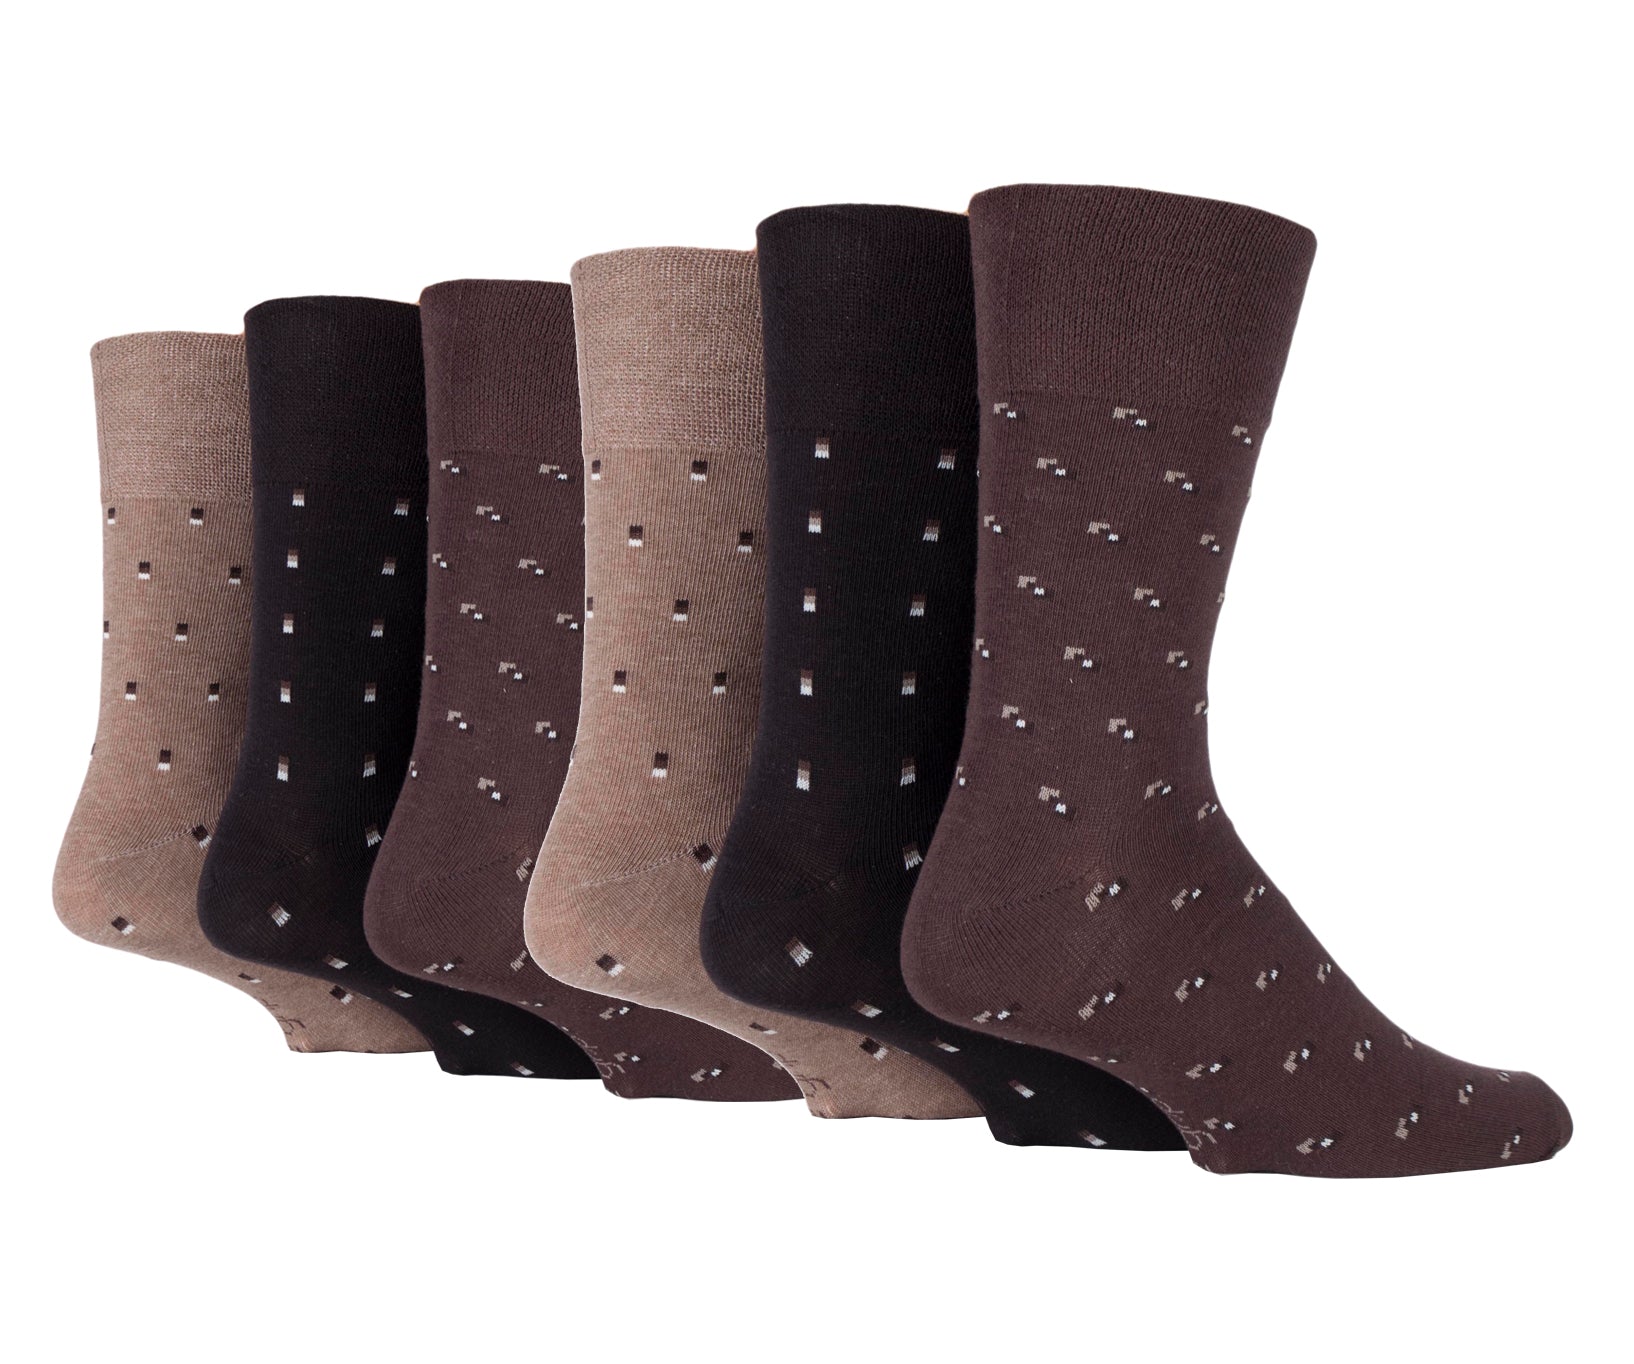 6 Pairs Men's Gentle Grip Cotton Socks Suit Brown